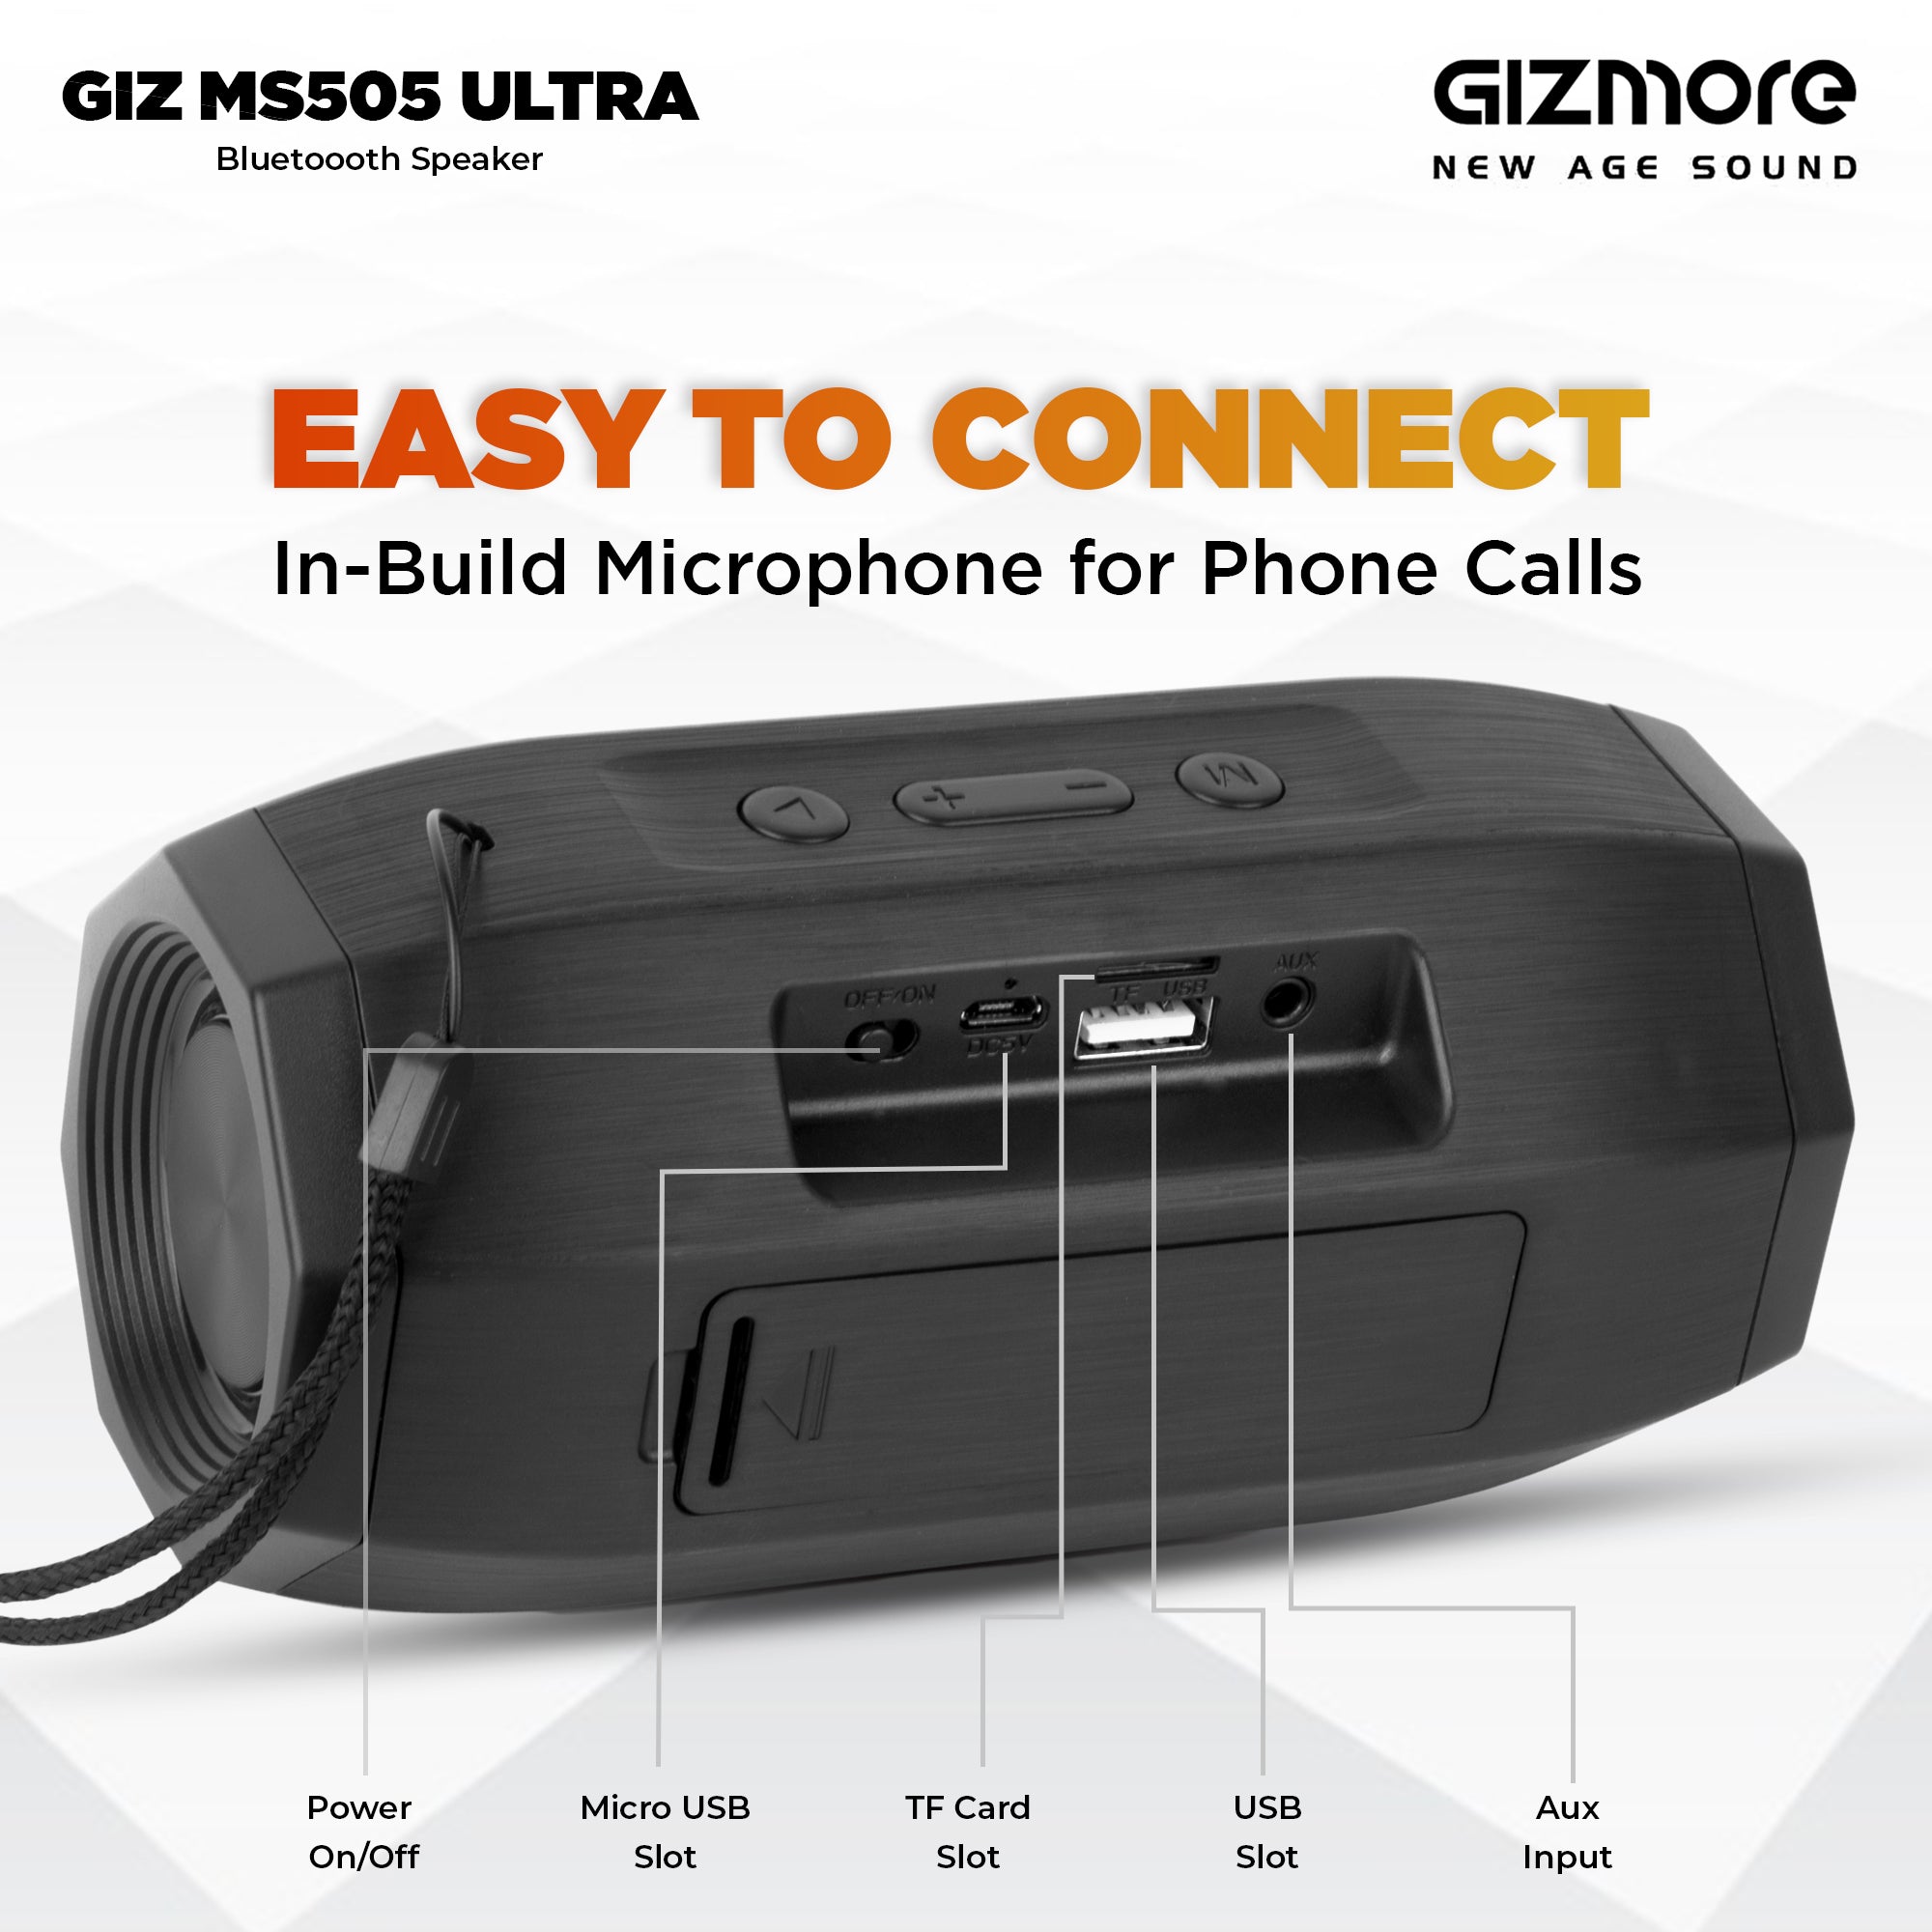 Gizmore GIZ MS505 ULTRA 5 W Bluetooth Speaker